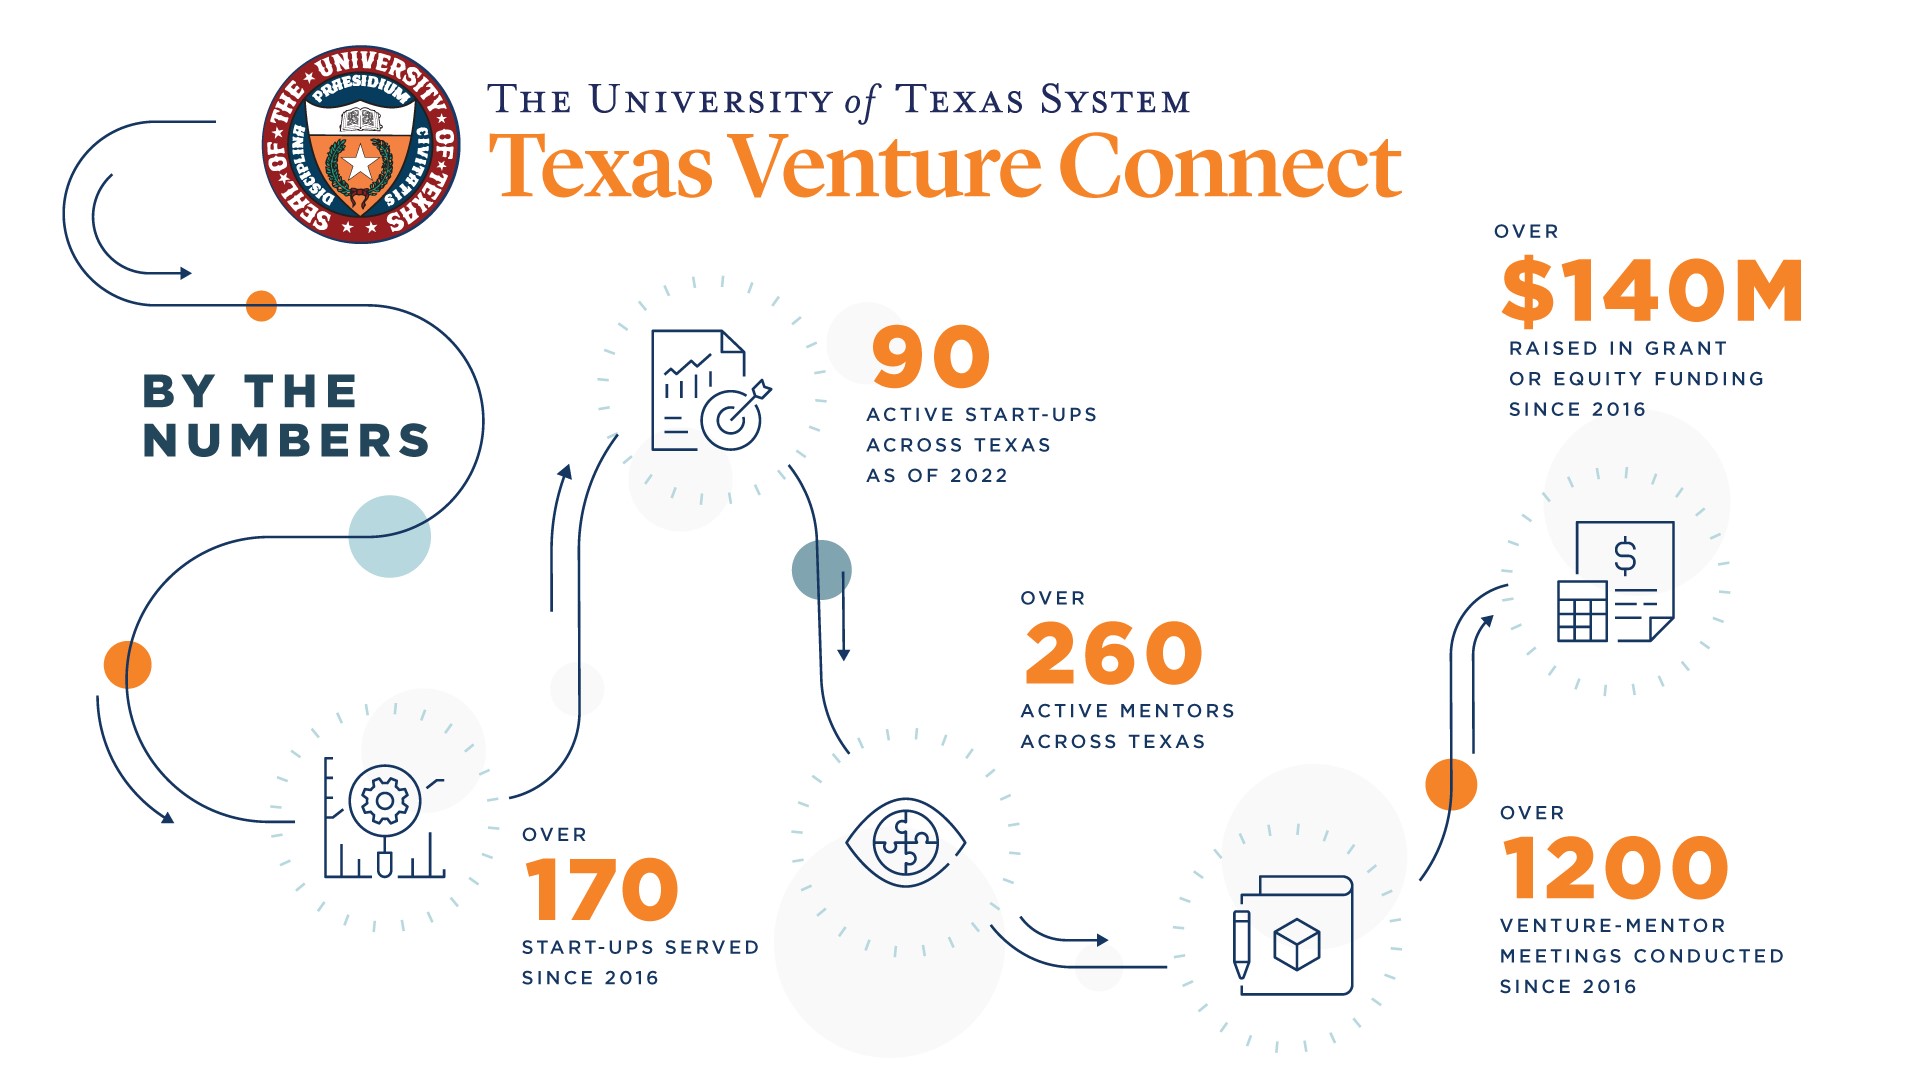 UT System Texas Venture Connect